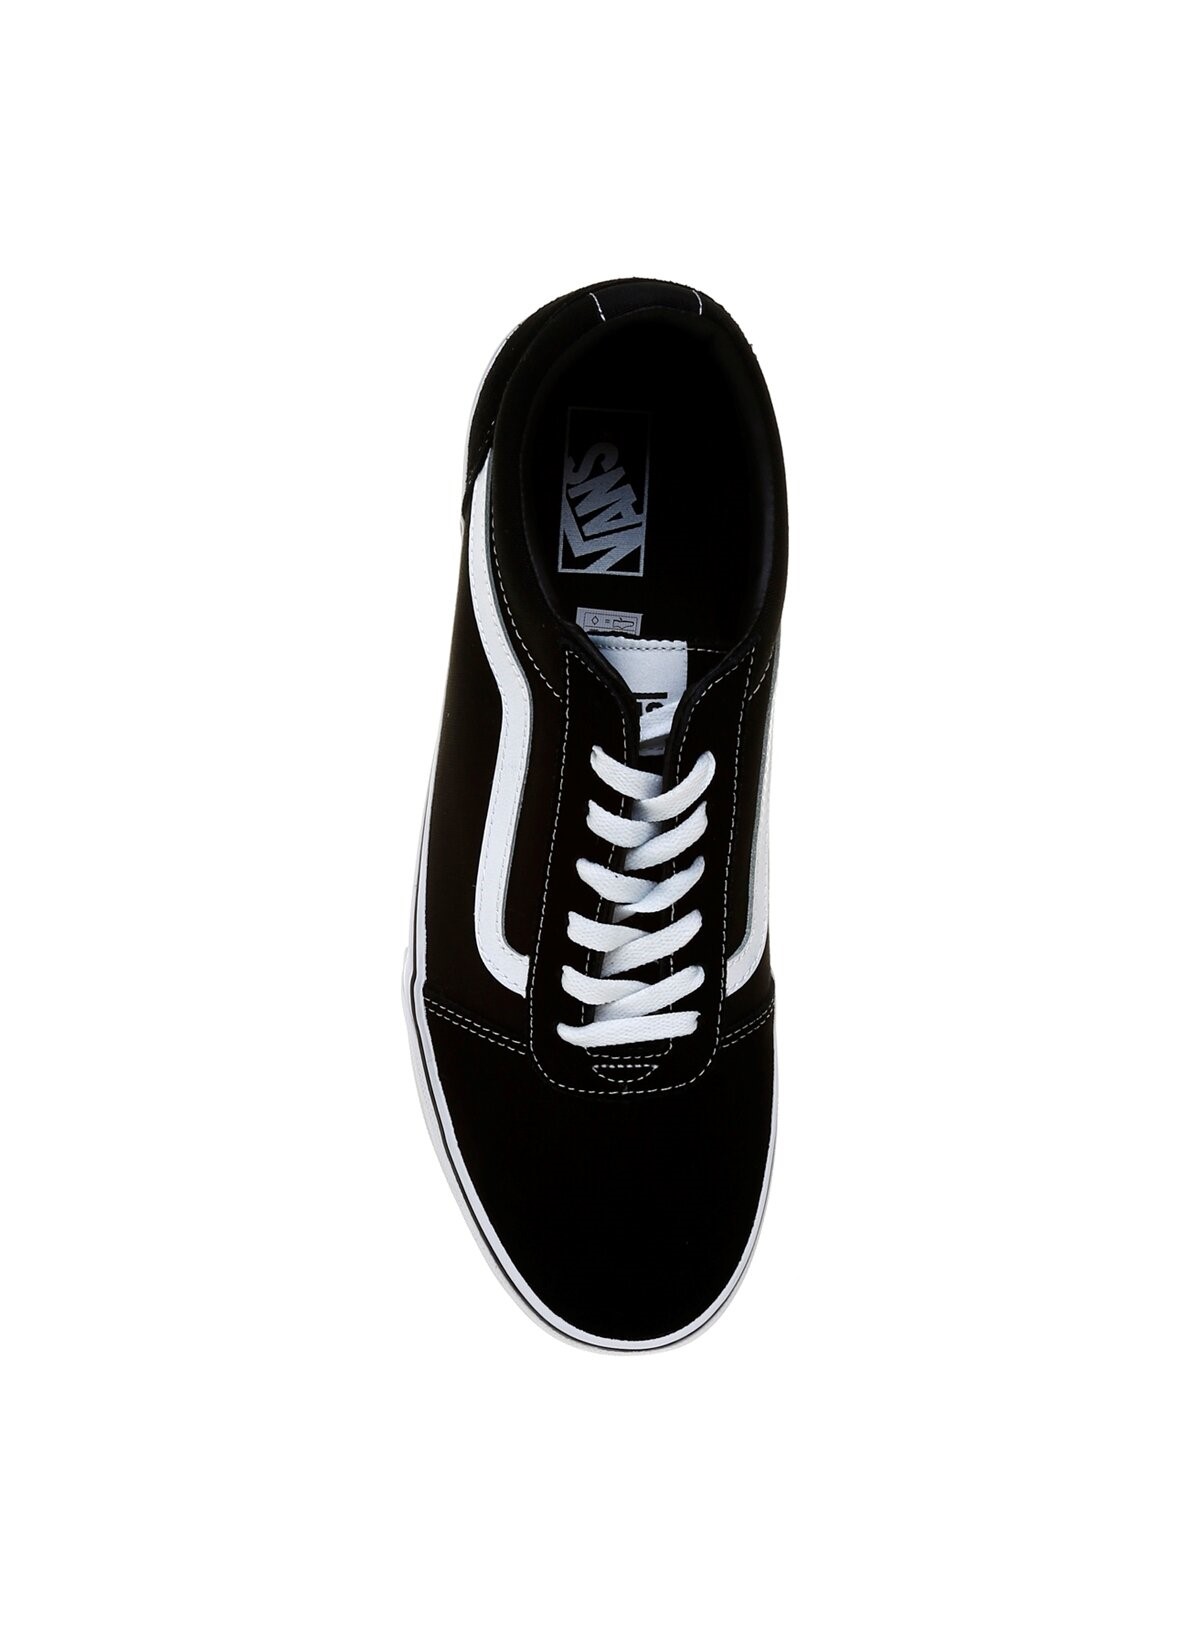 Vans Erkek Ayakkabı VN0A36EMC4R1 (Suede/Canvas) Black/White